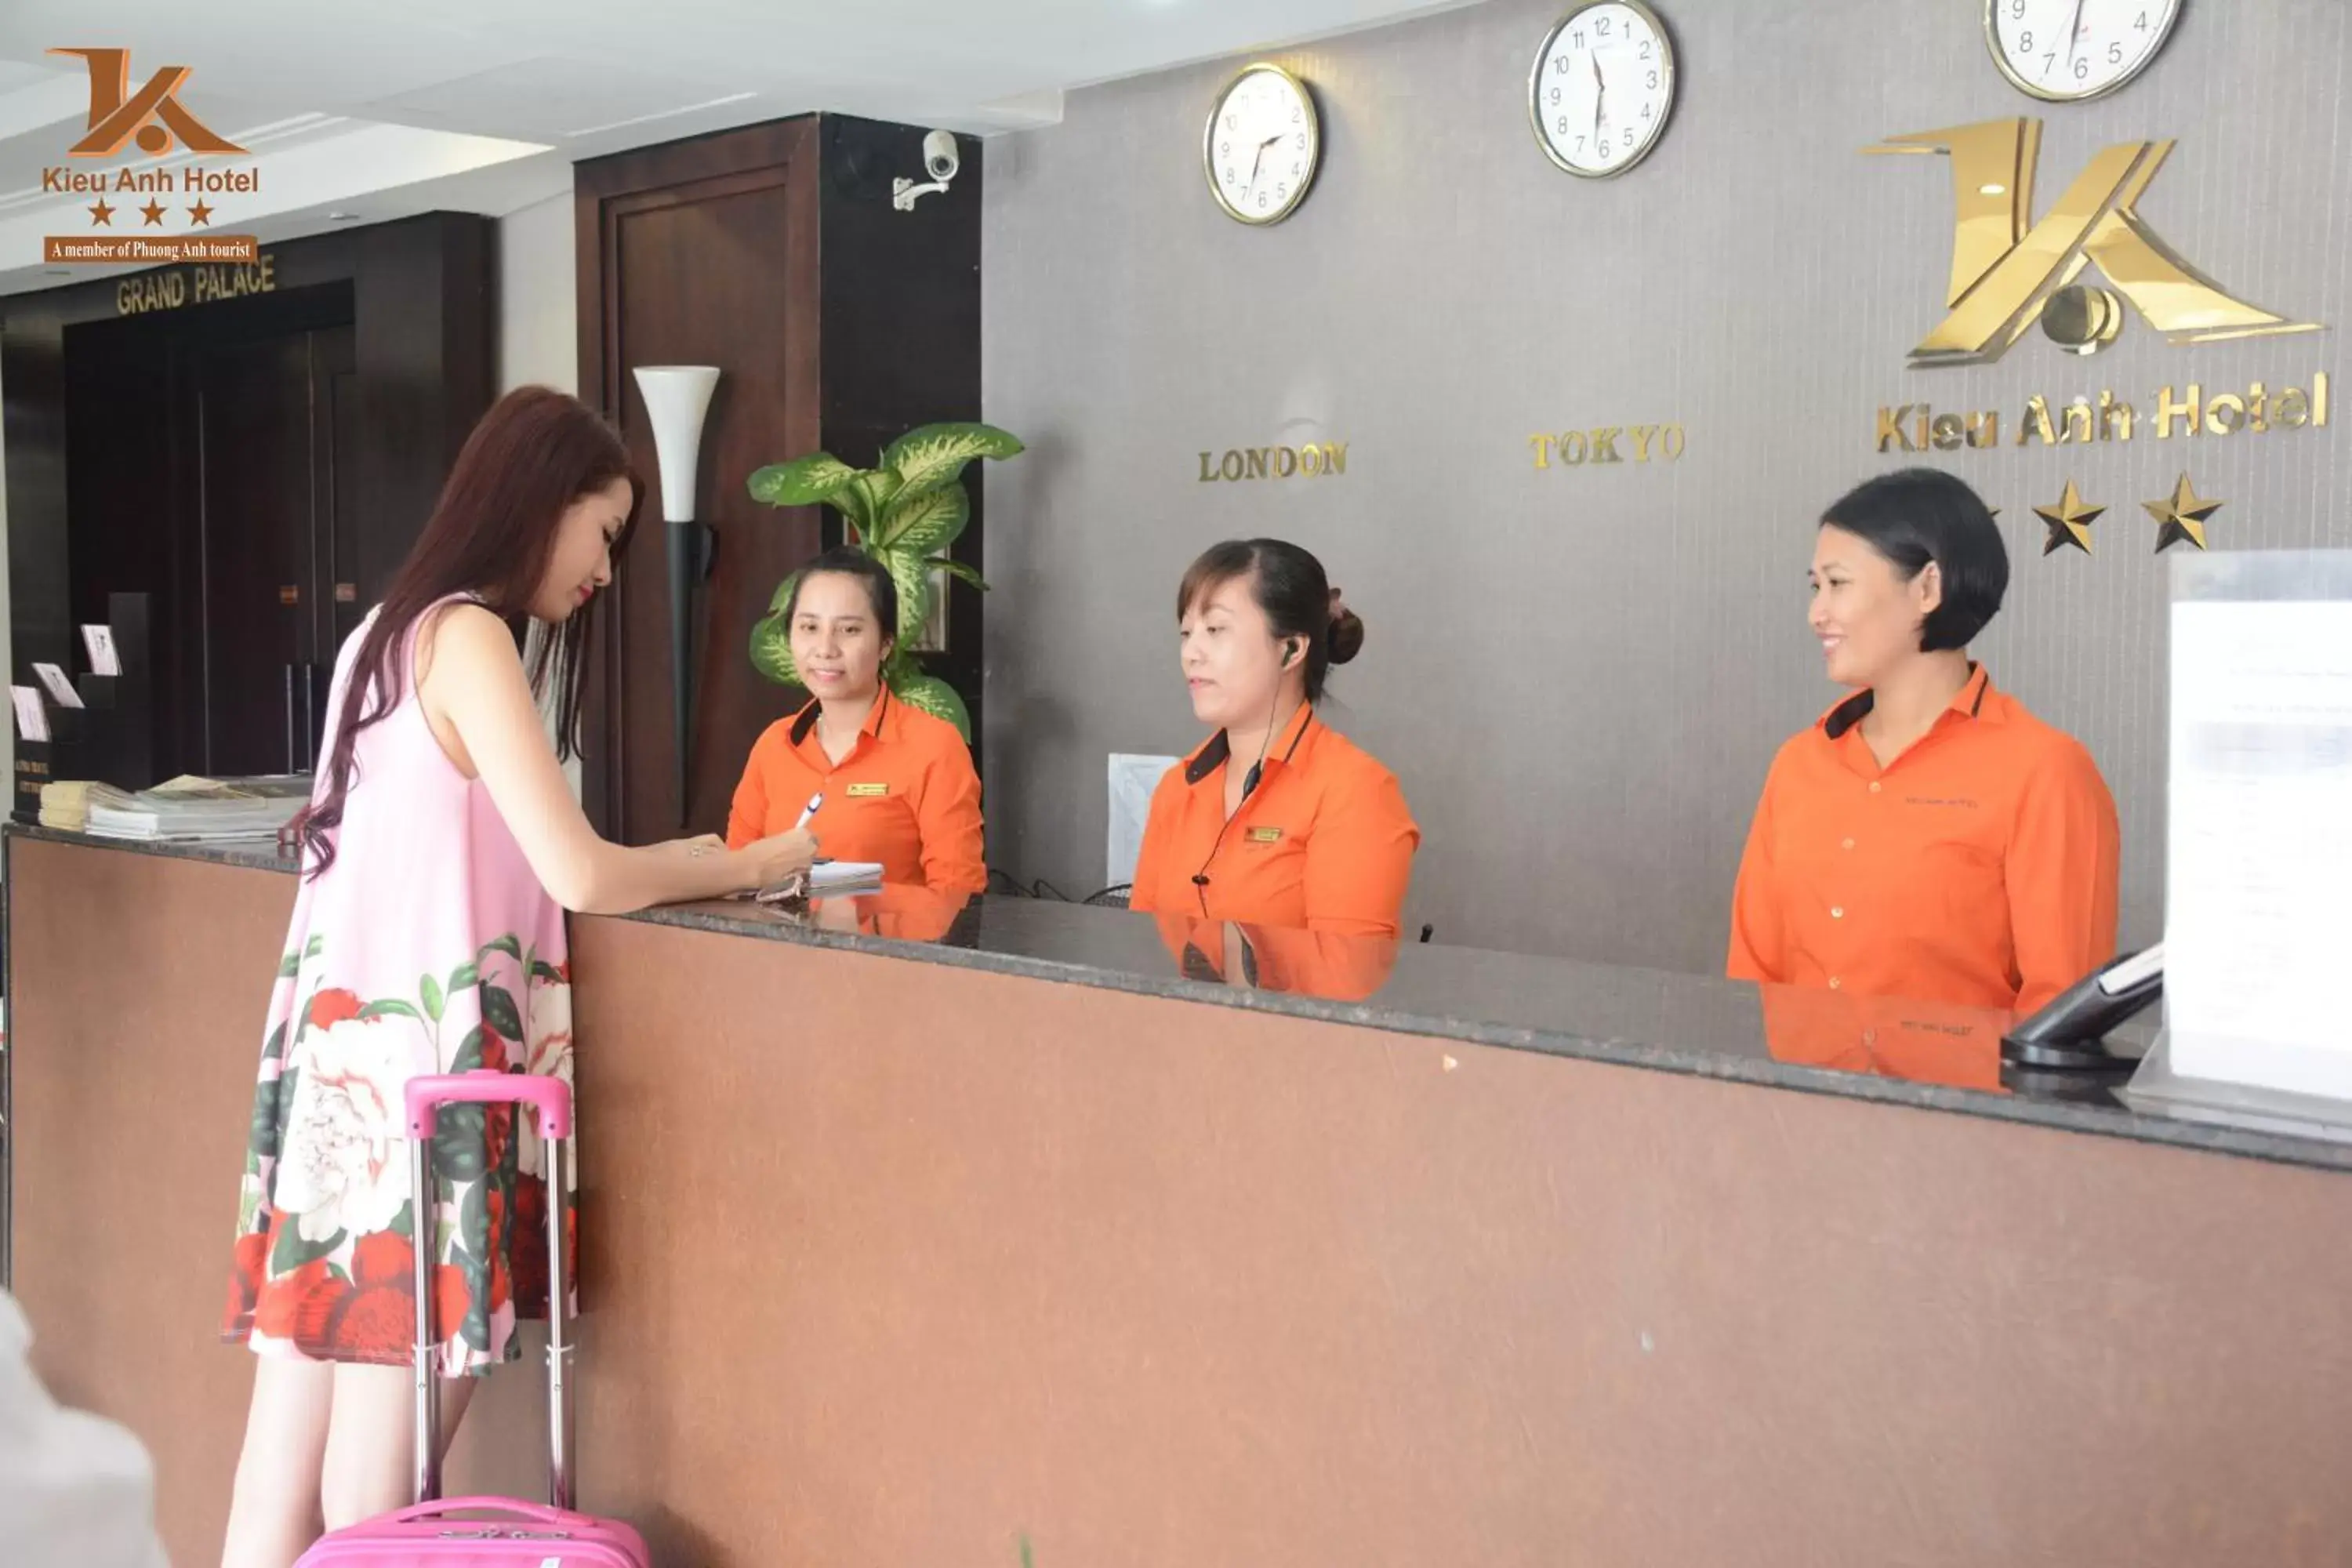 Lobby or reception in Kieu Anh Hotel